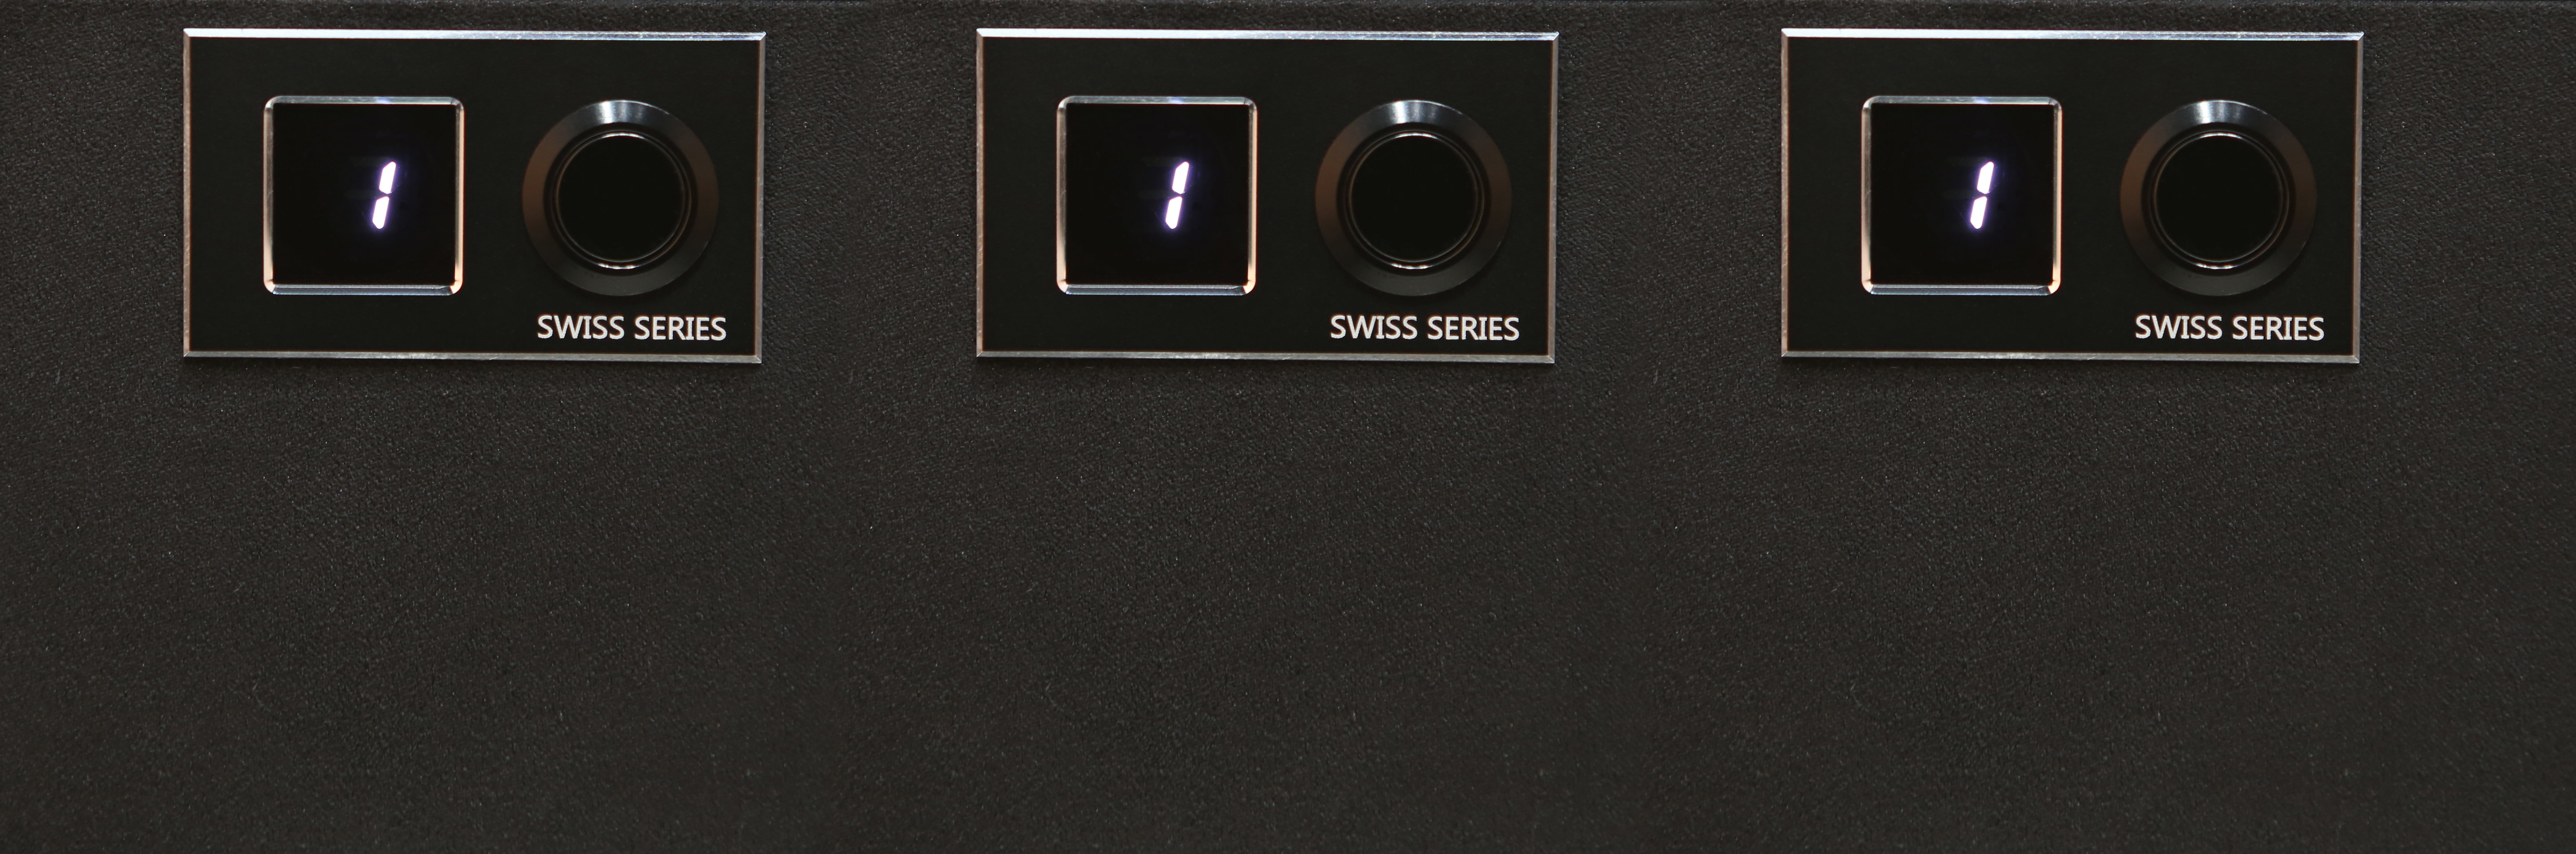 Swiss Series LE Lea 3.20 BL